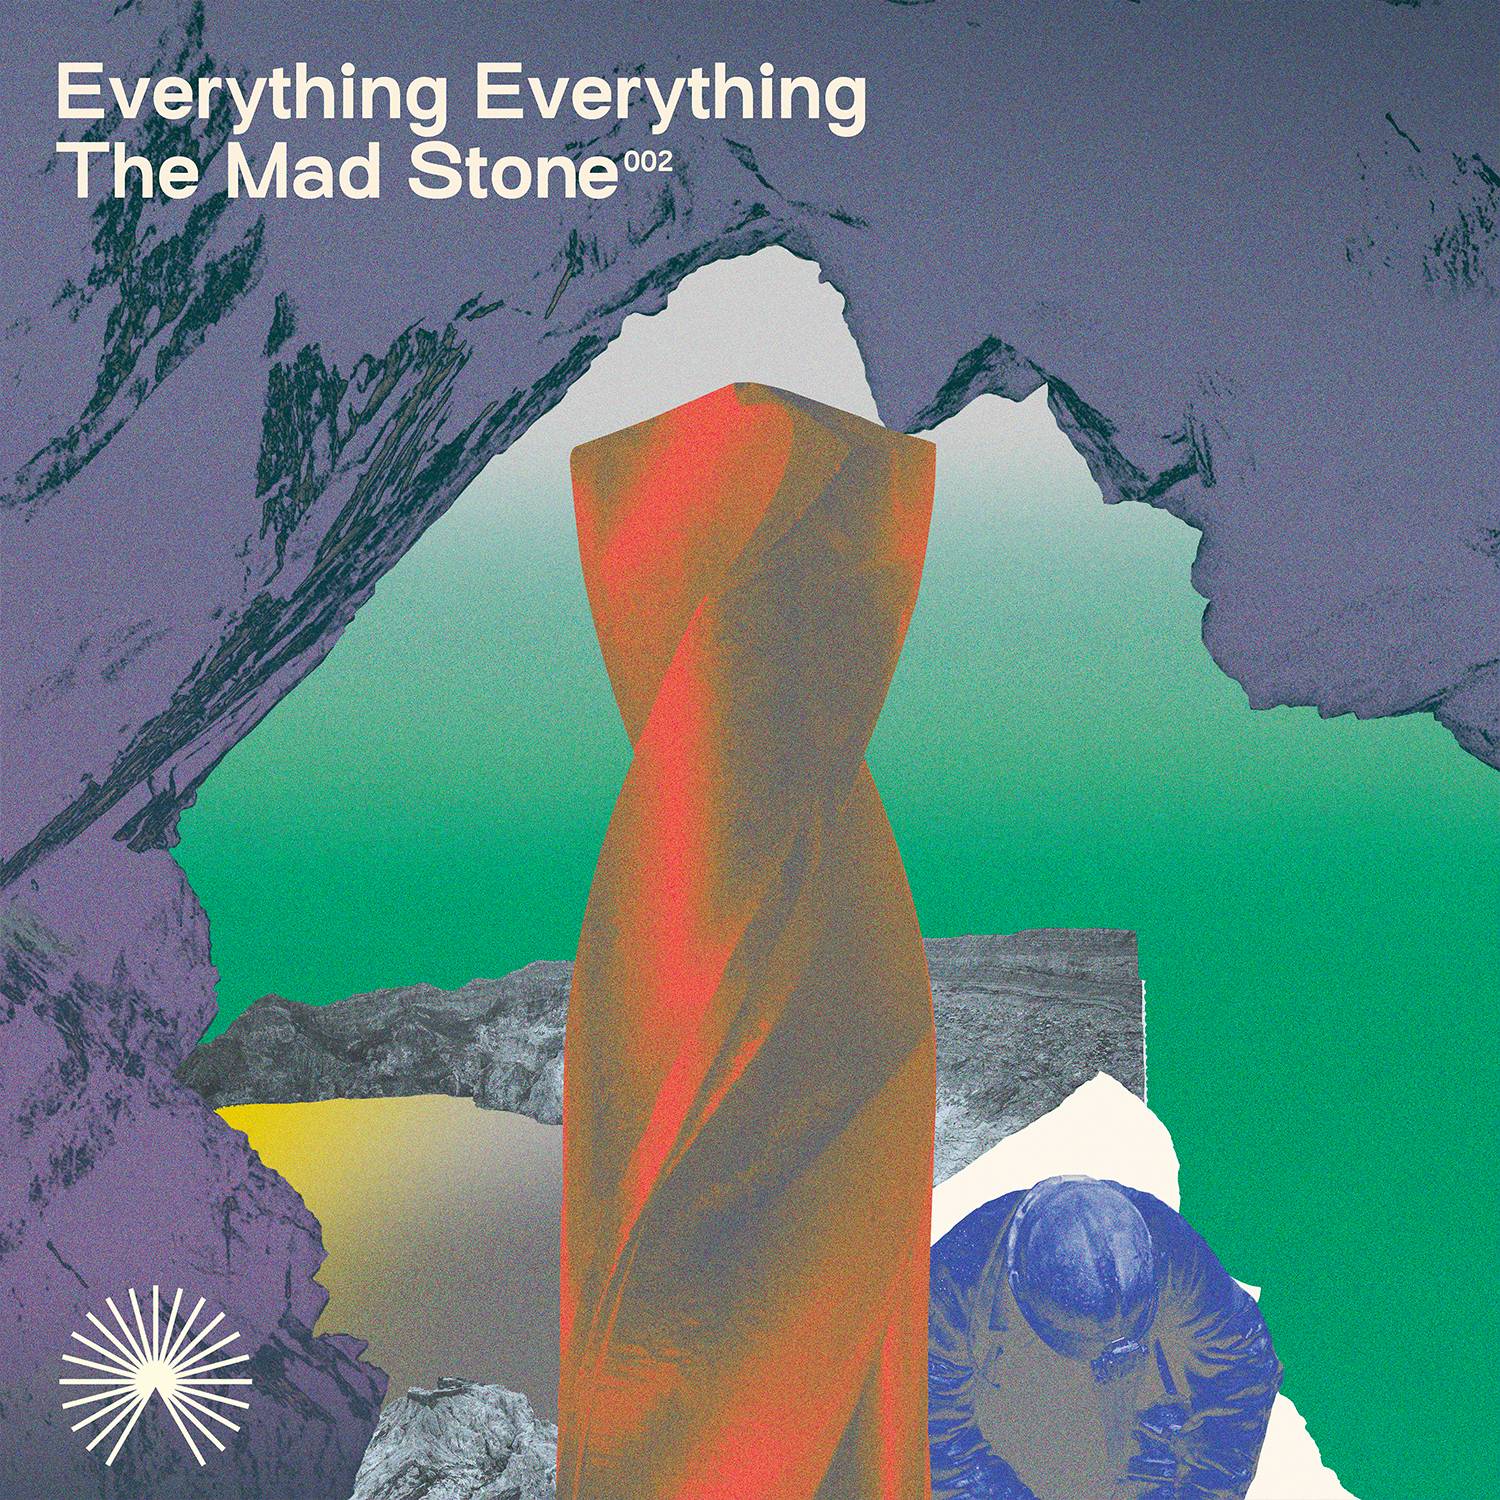 Everything Everything “The Mad Stone” single artwork